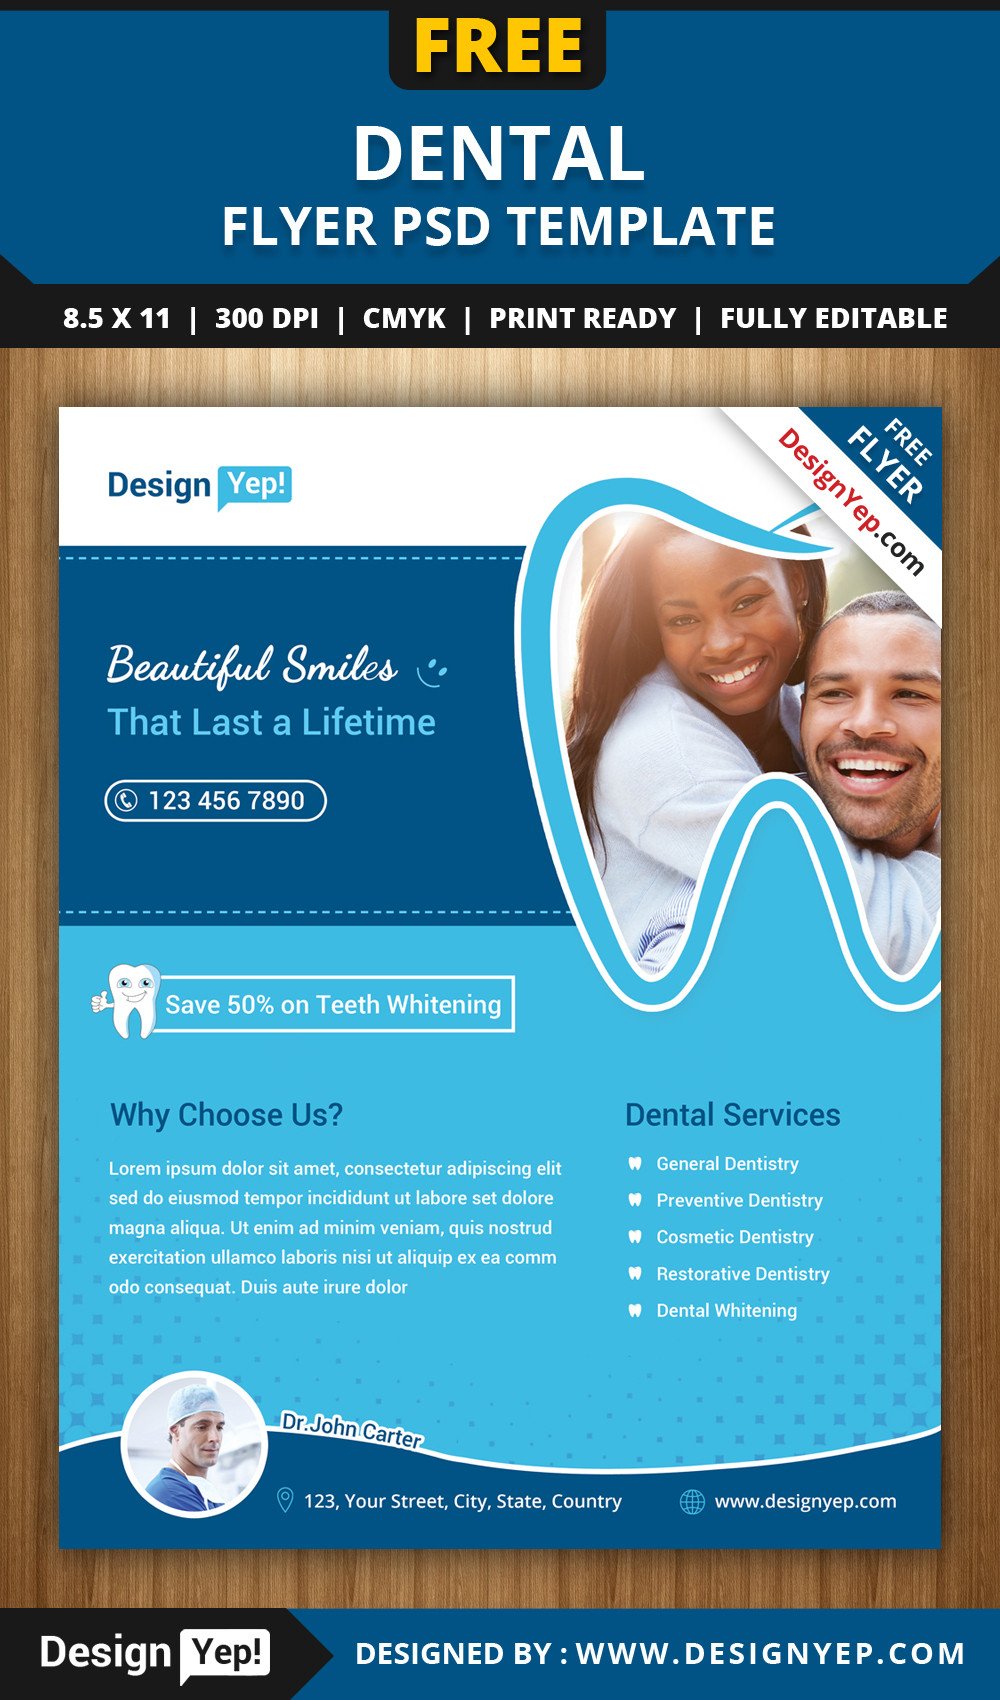 Free Dental Flyer PSD Template DesignYep